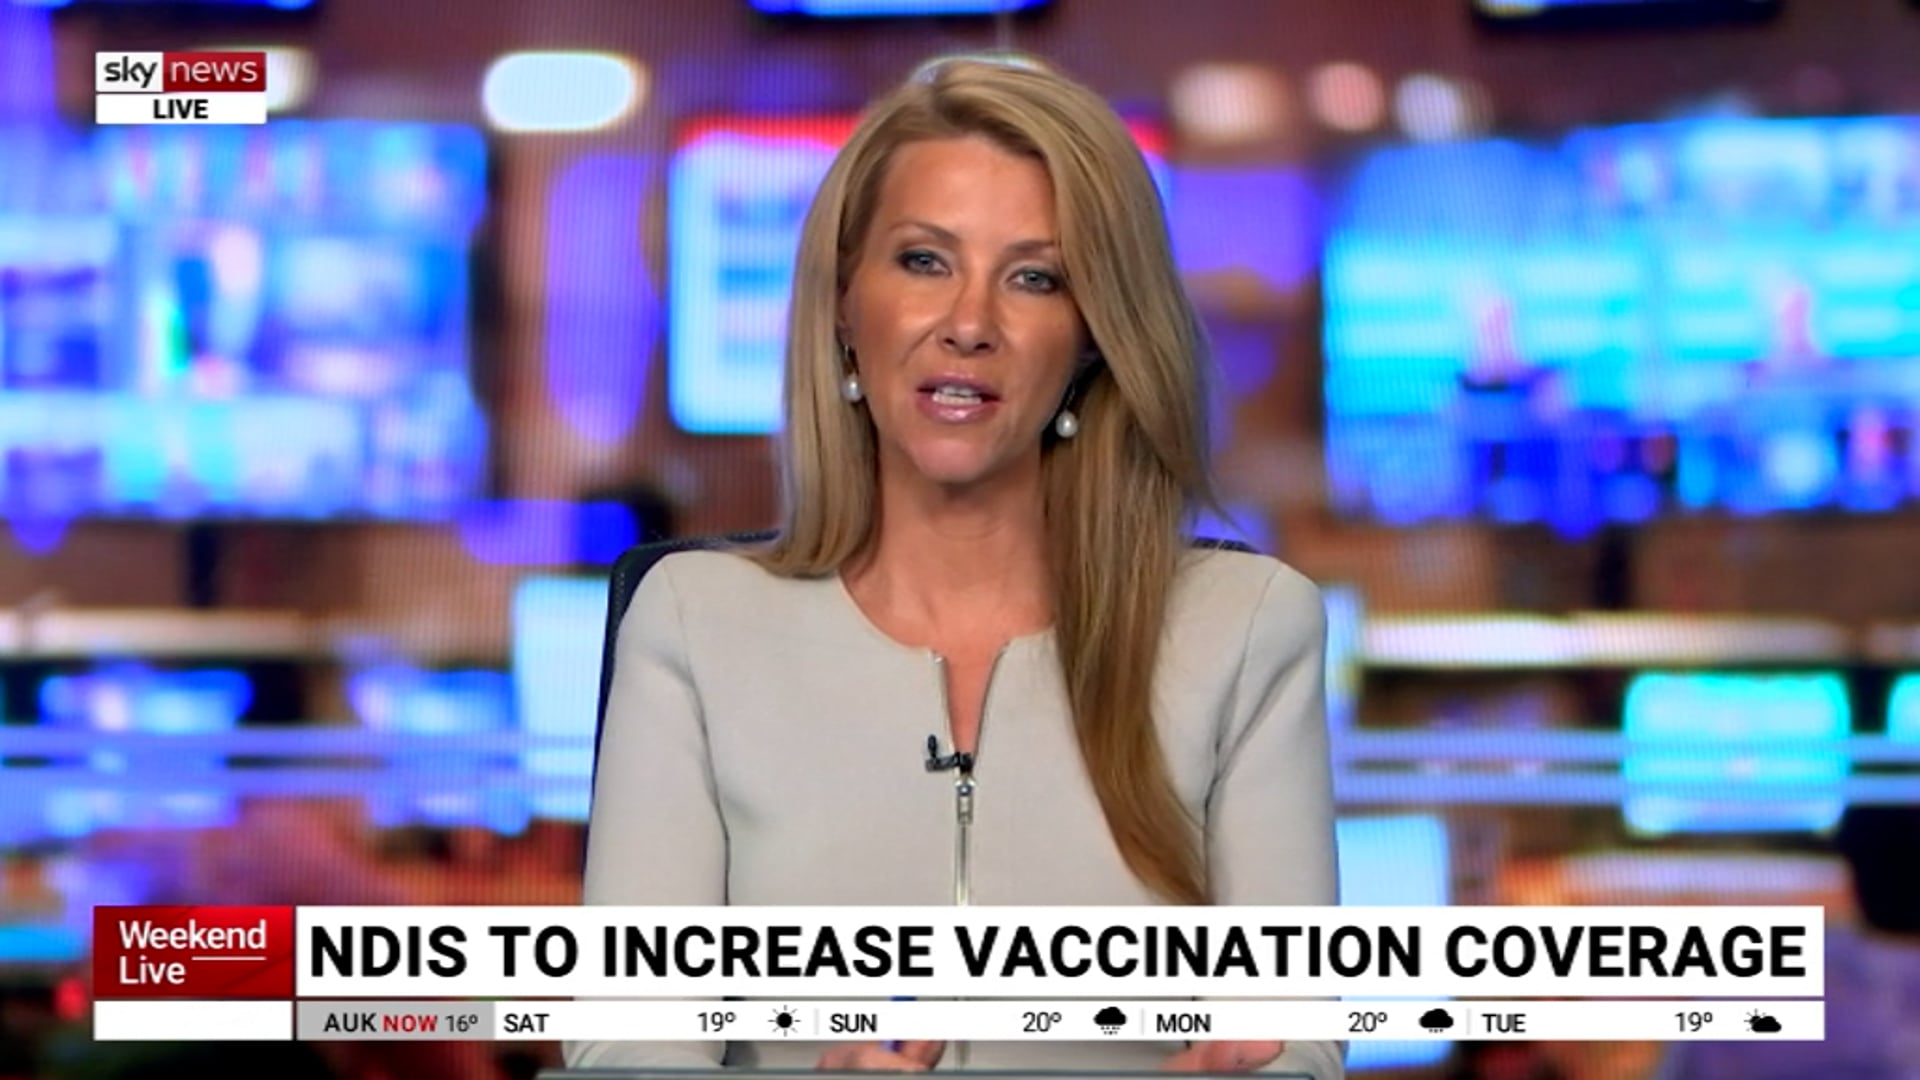 Sky News Vaccine NDIS